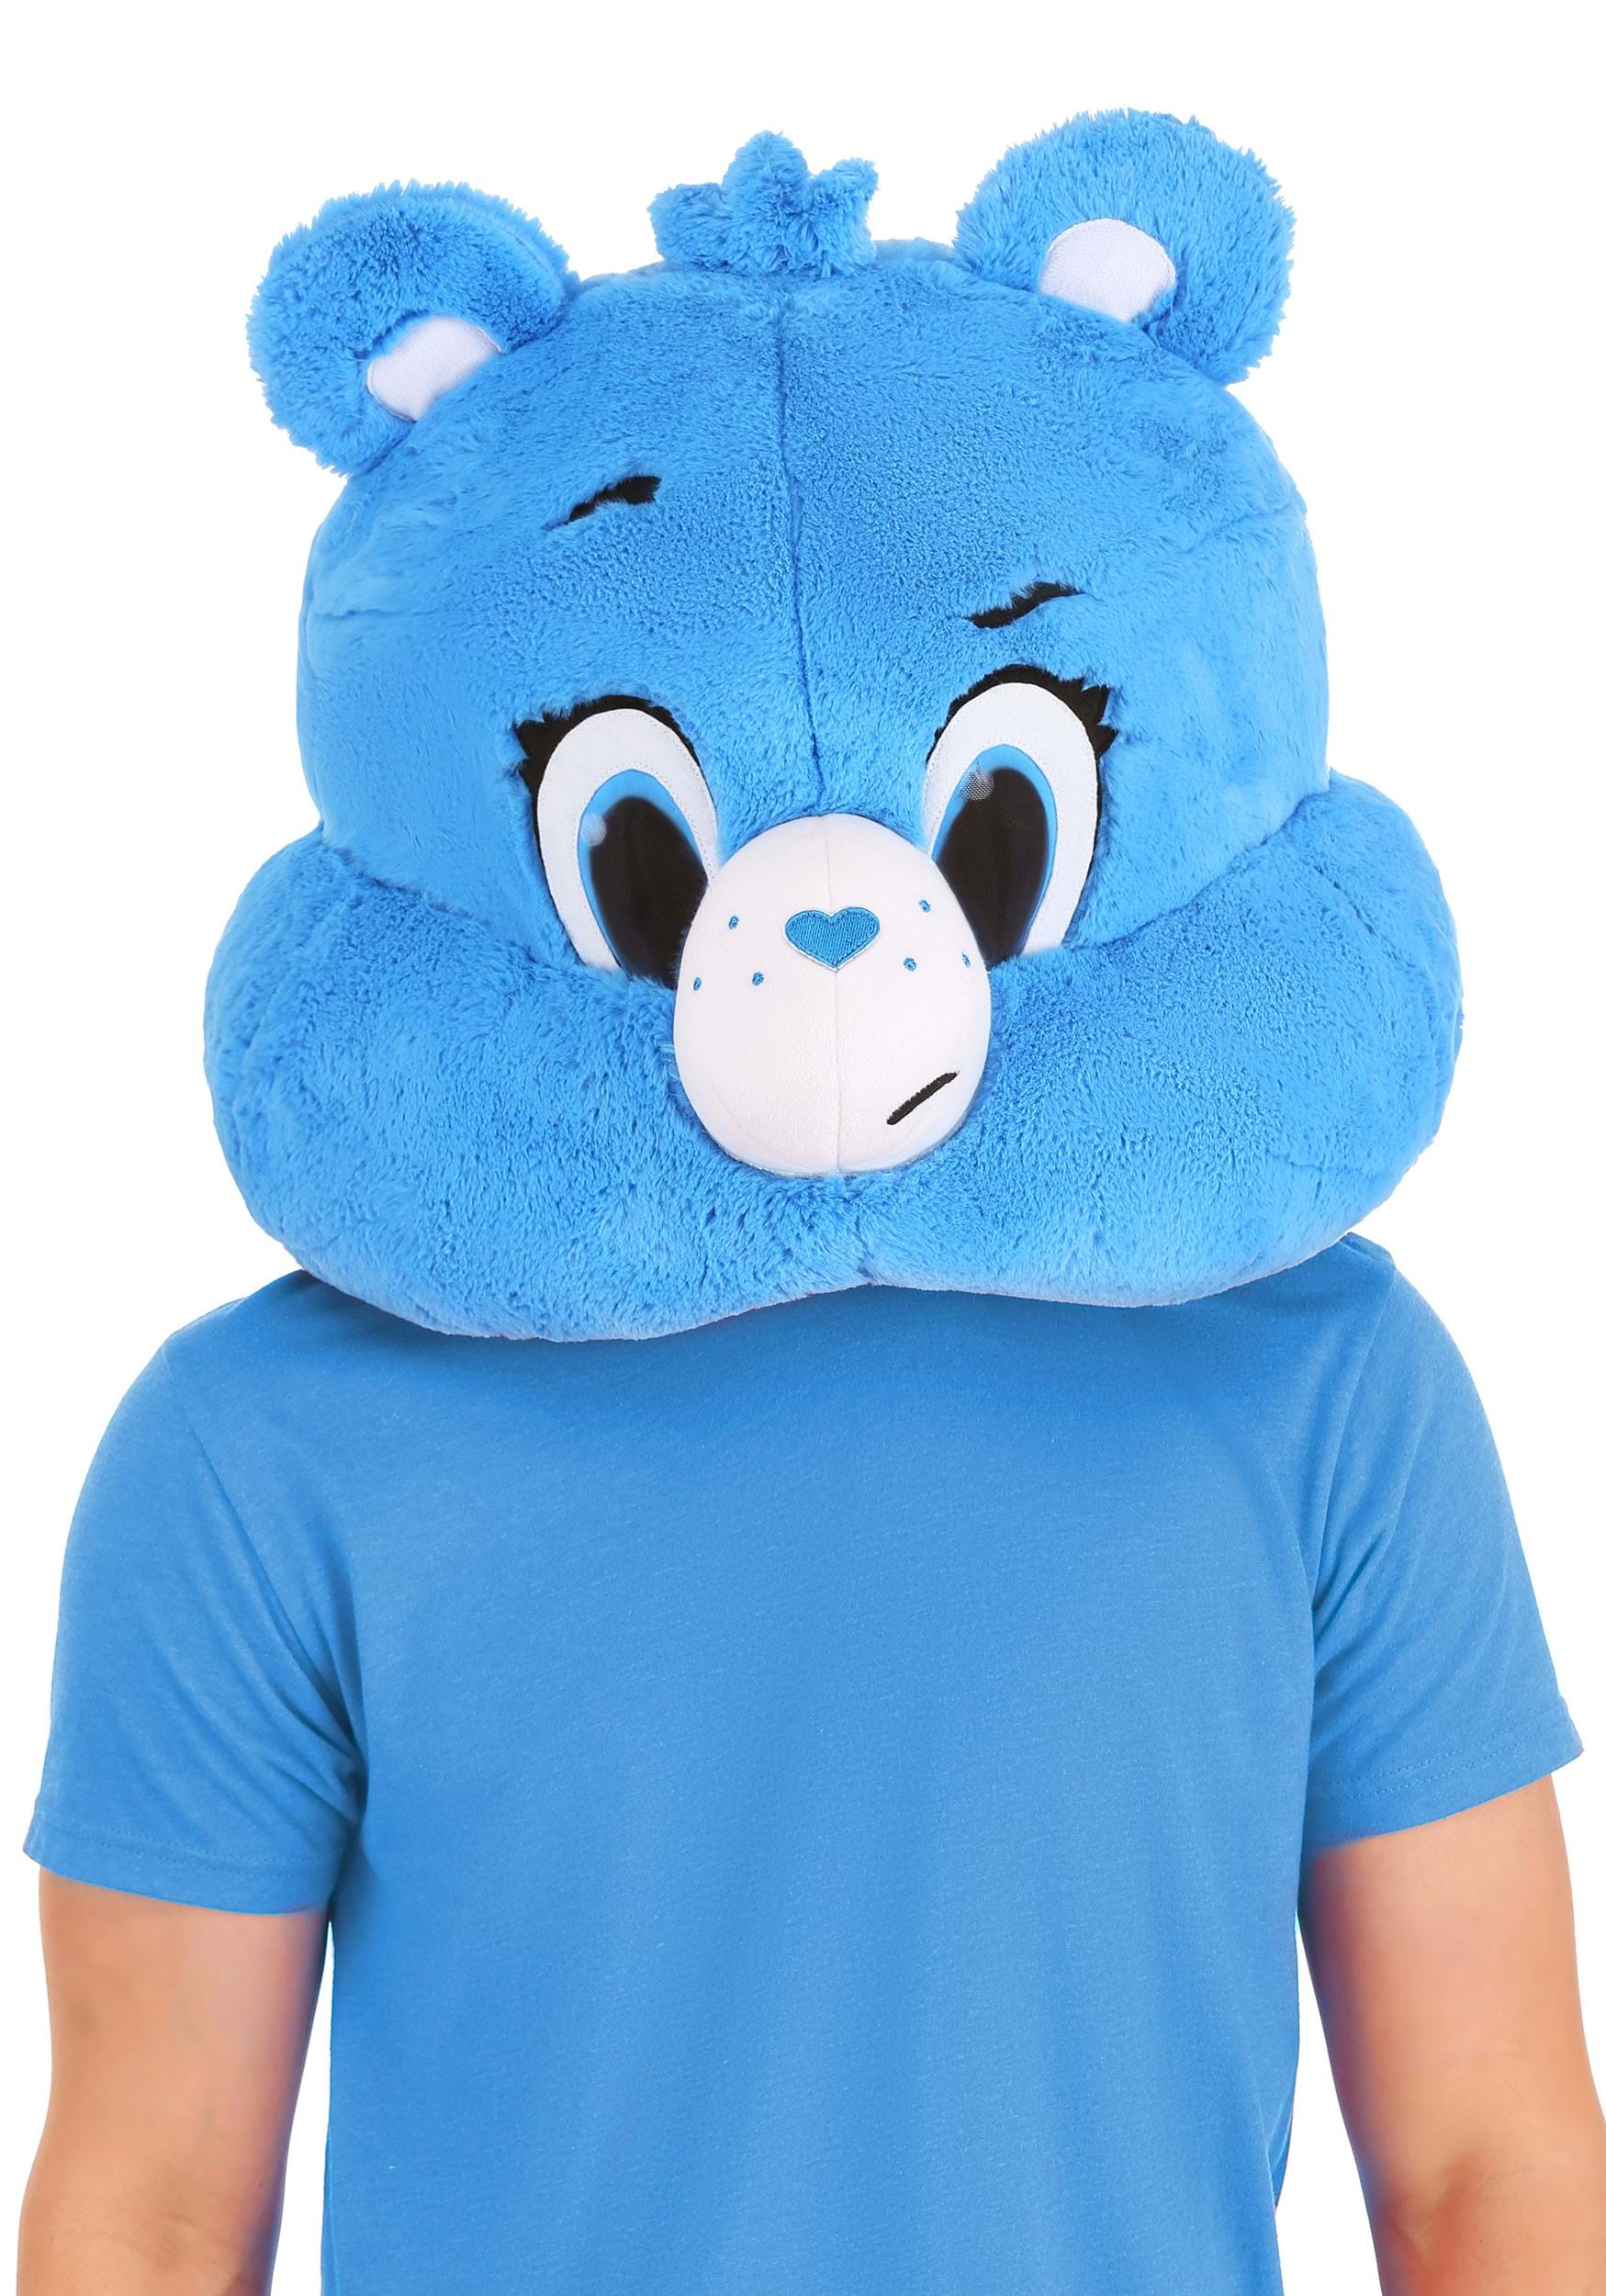 Photos - Fancy Dress CARE FUN Costumes  Bears Adult Grumpy Bear Mascot Mask |  Bears Accesso 